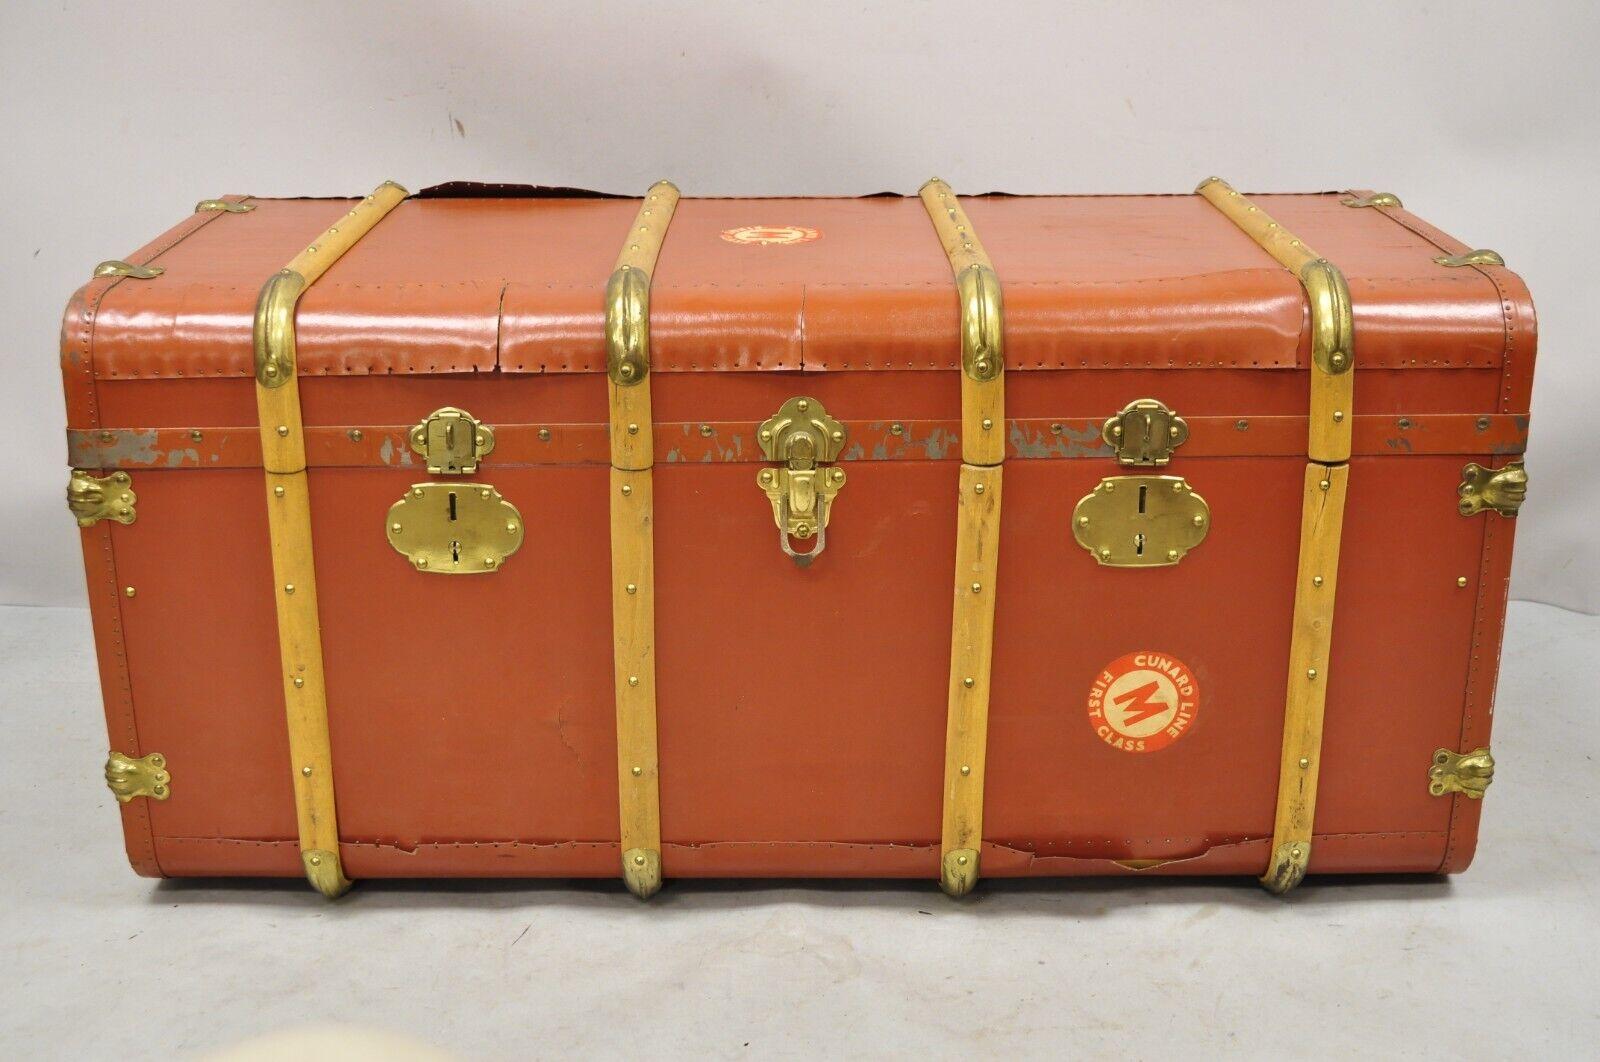 Antique Wooden Band Large Steamer Trunk Orange Ship Trunk Cunard Line Decals For Sale 5